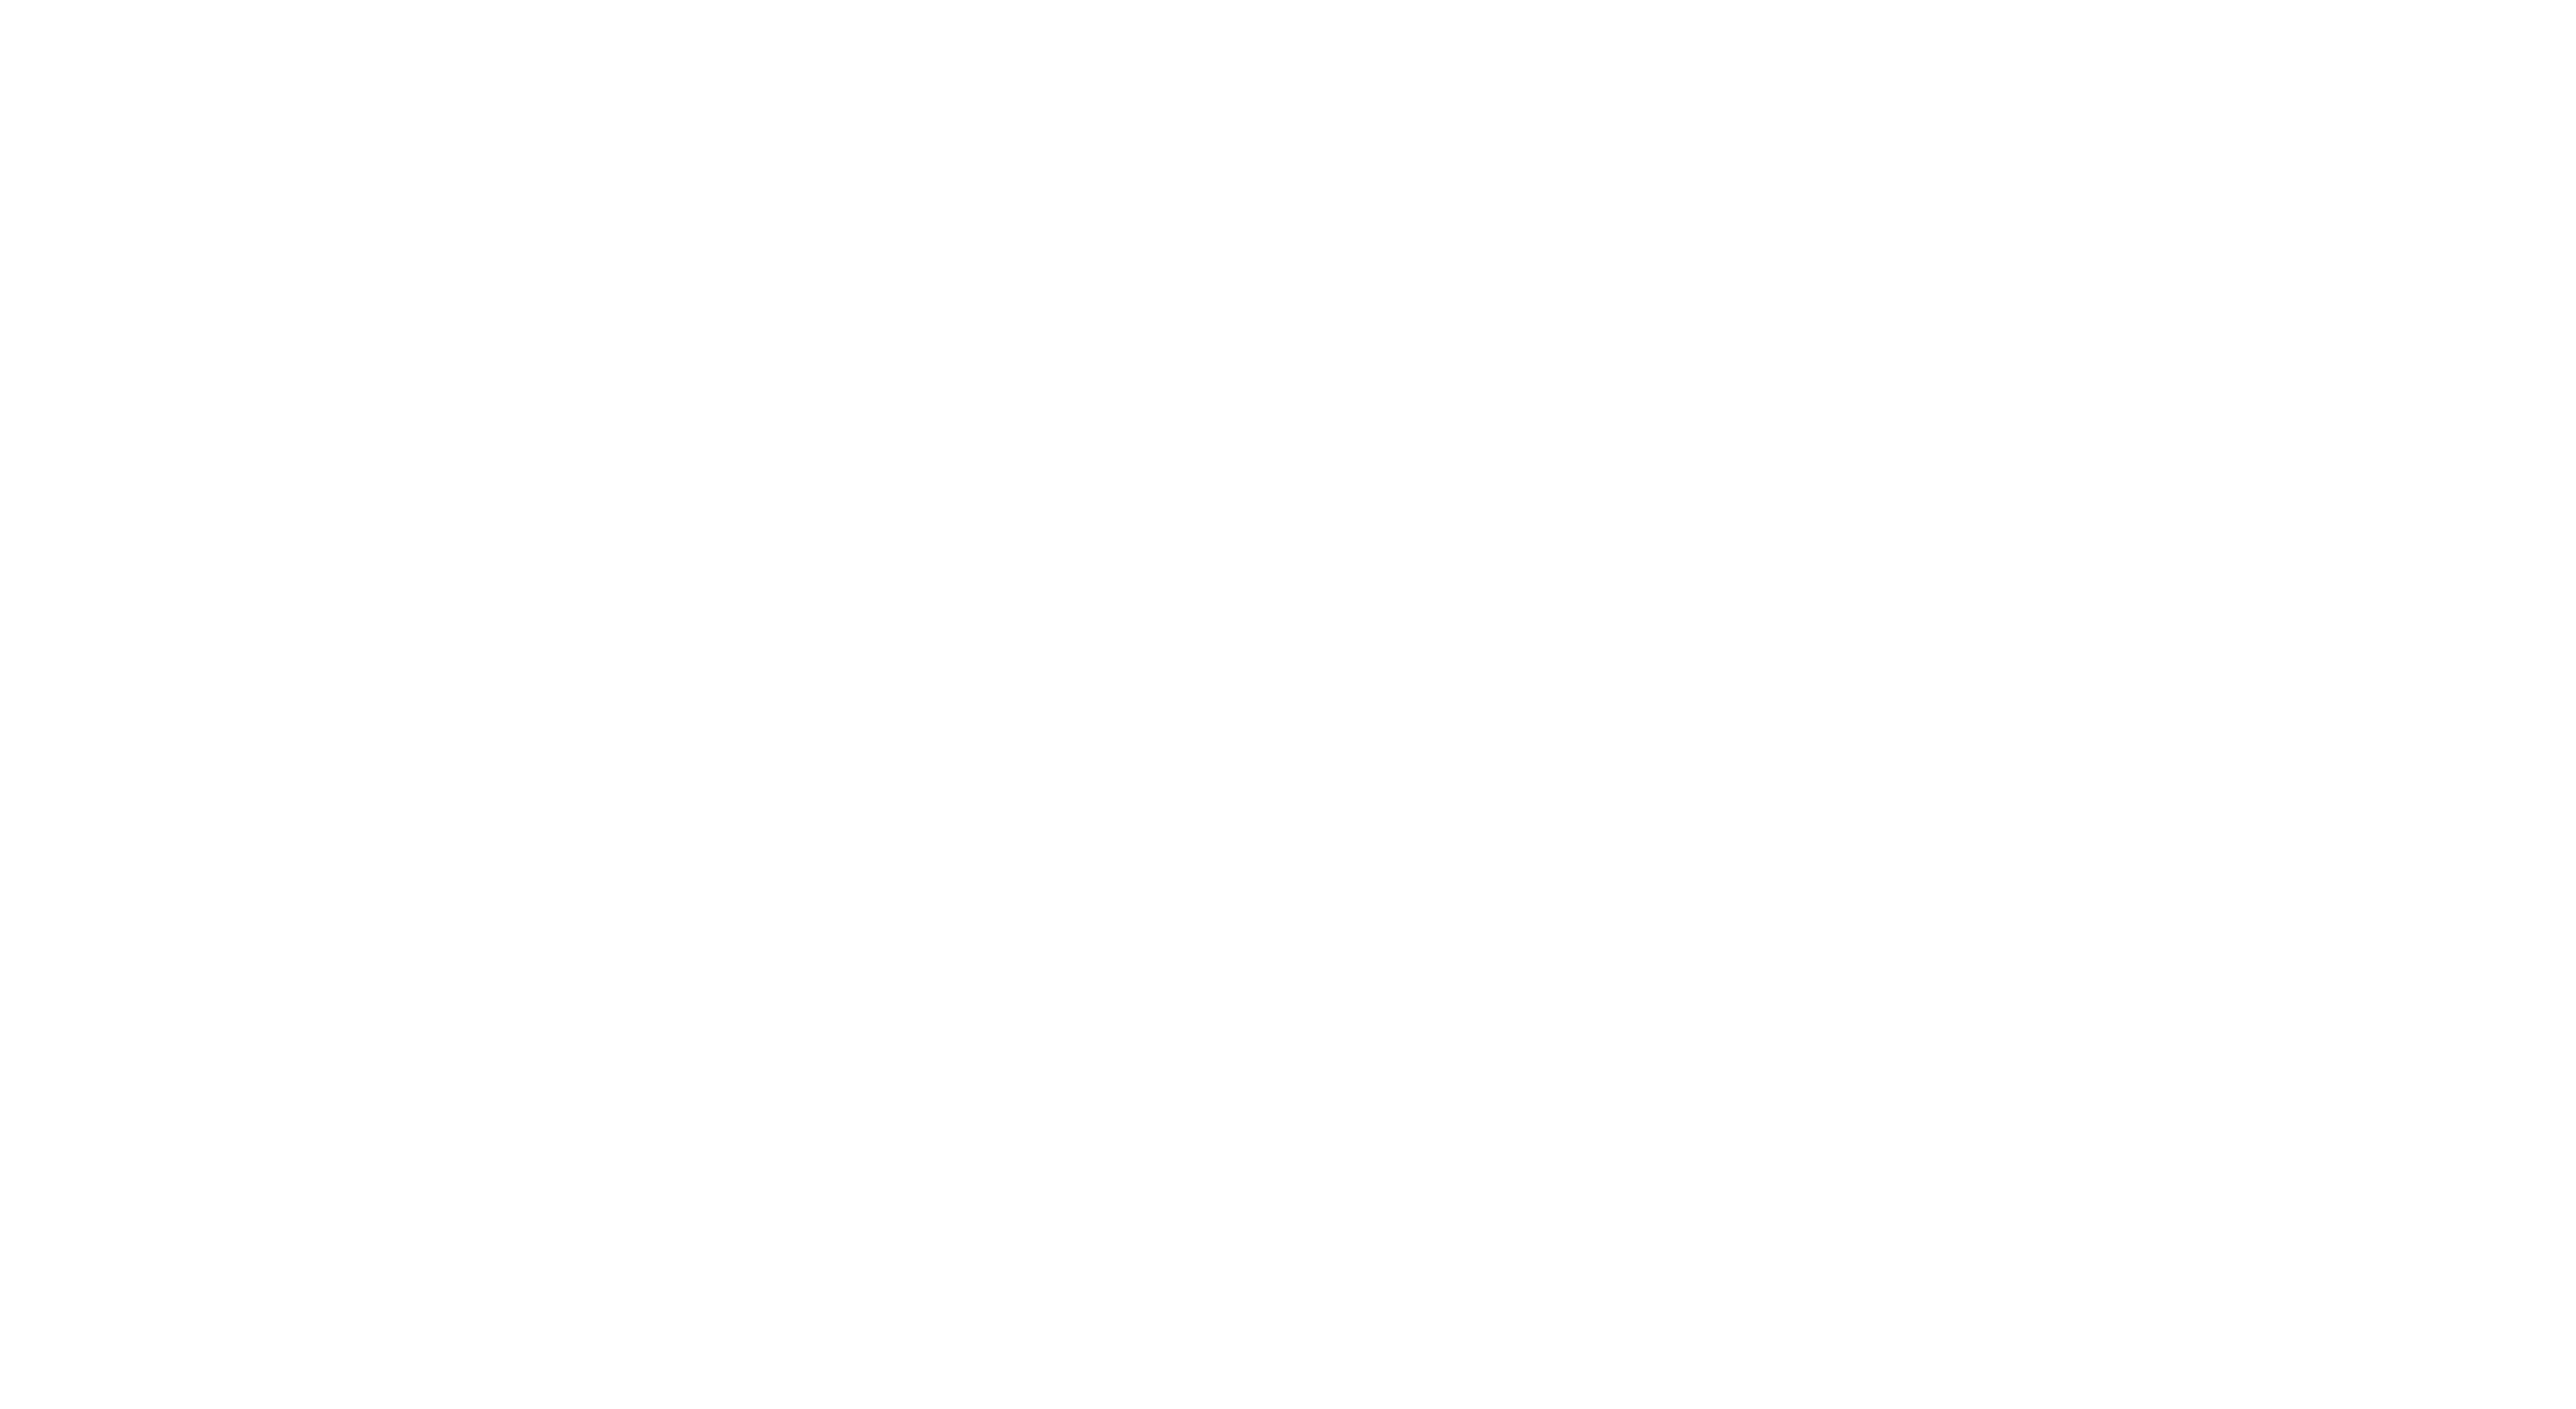 Texas Sea Grant at Texas A&M University